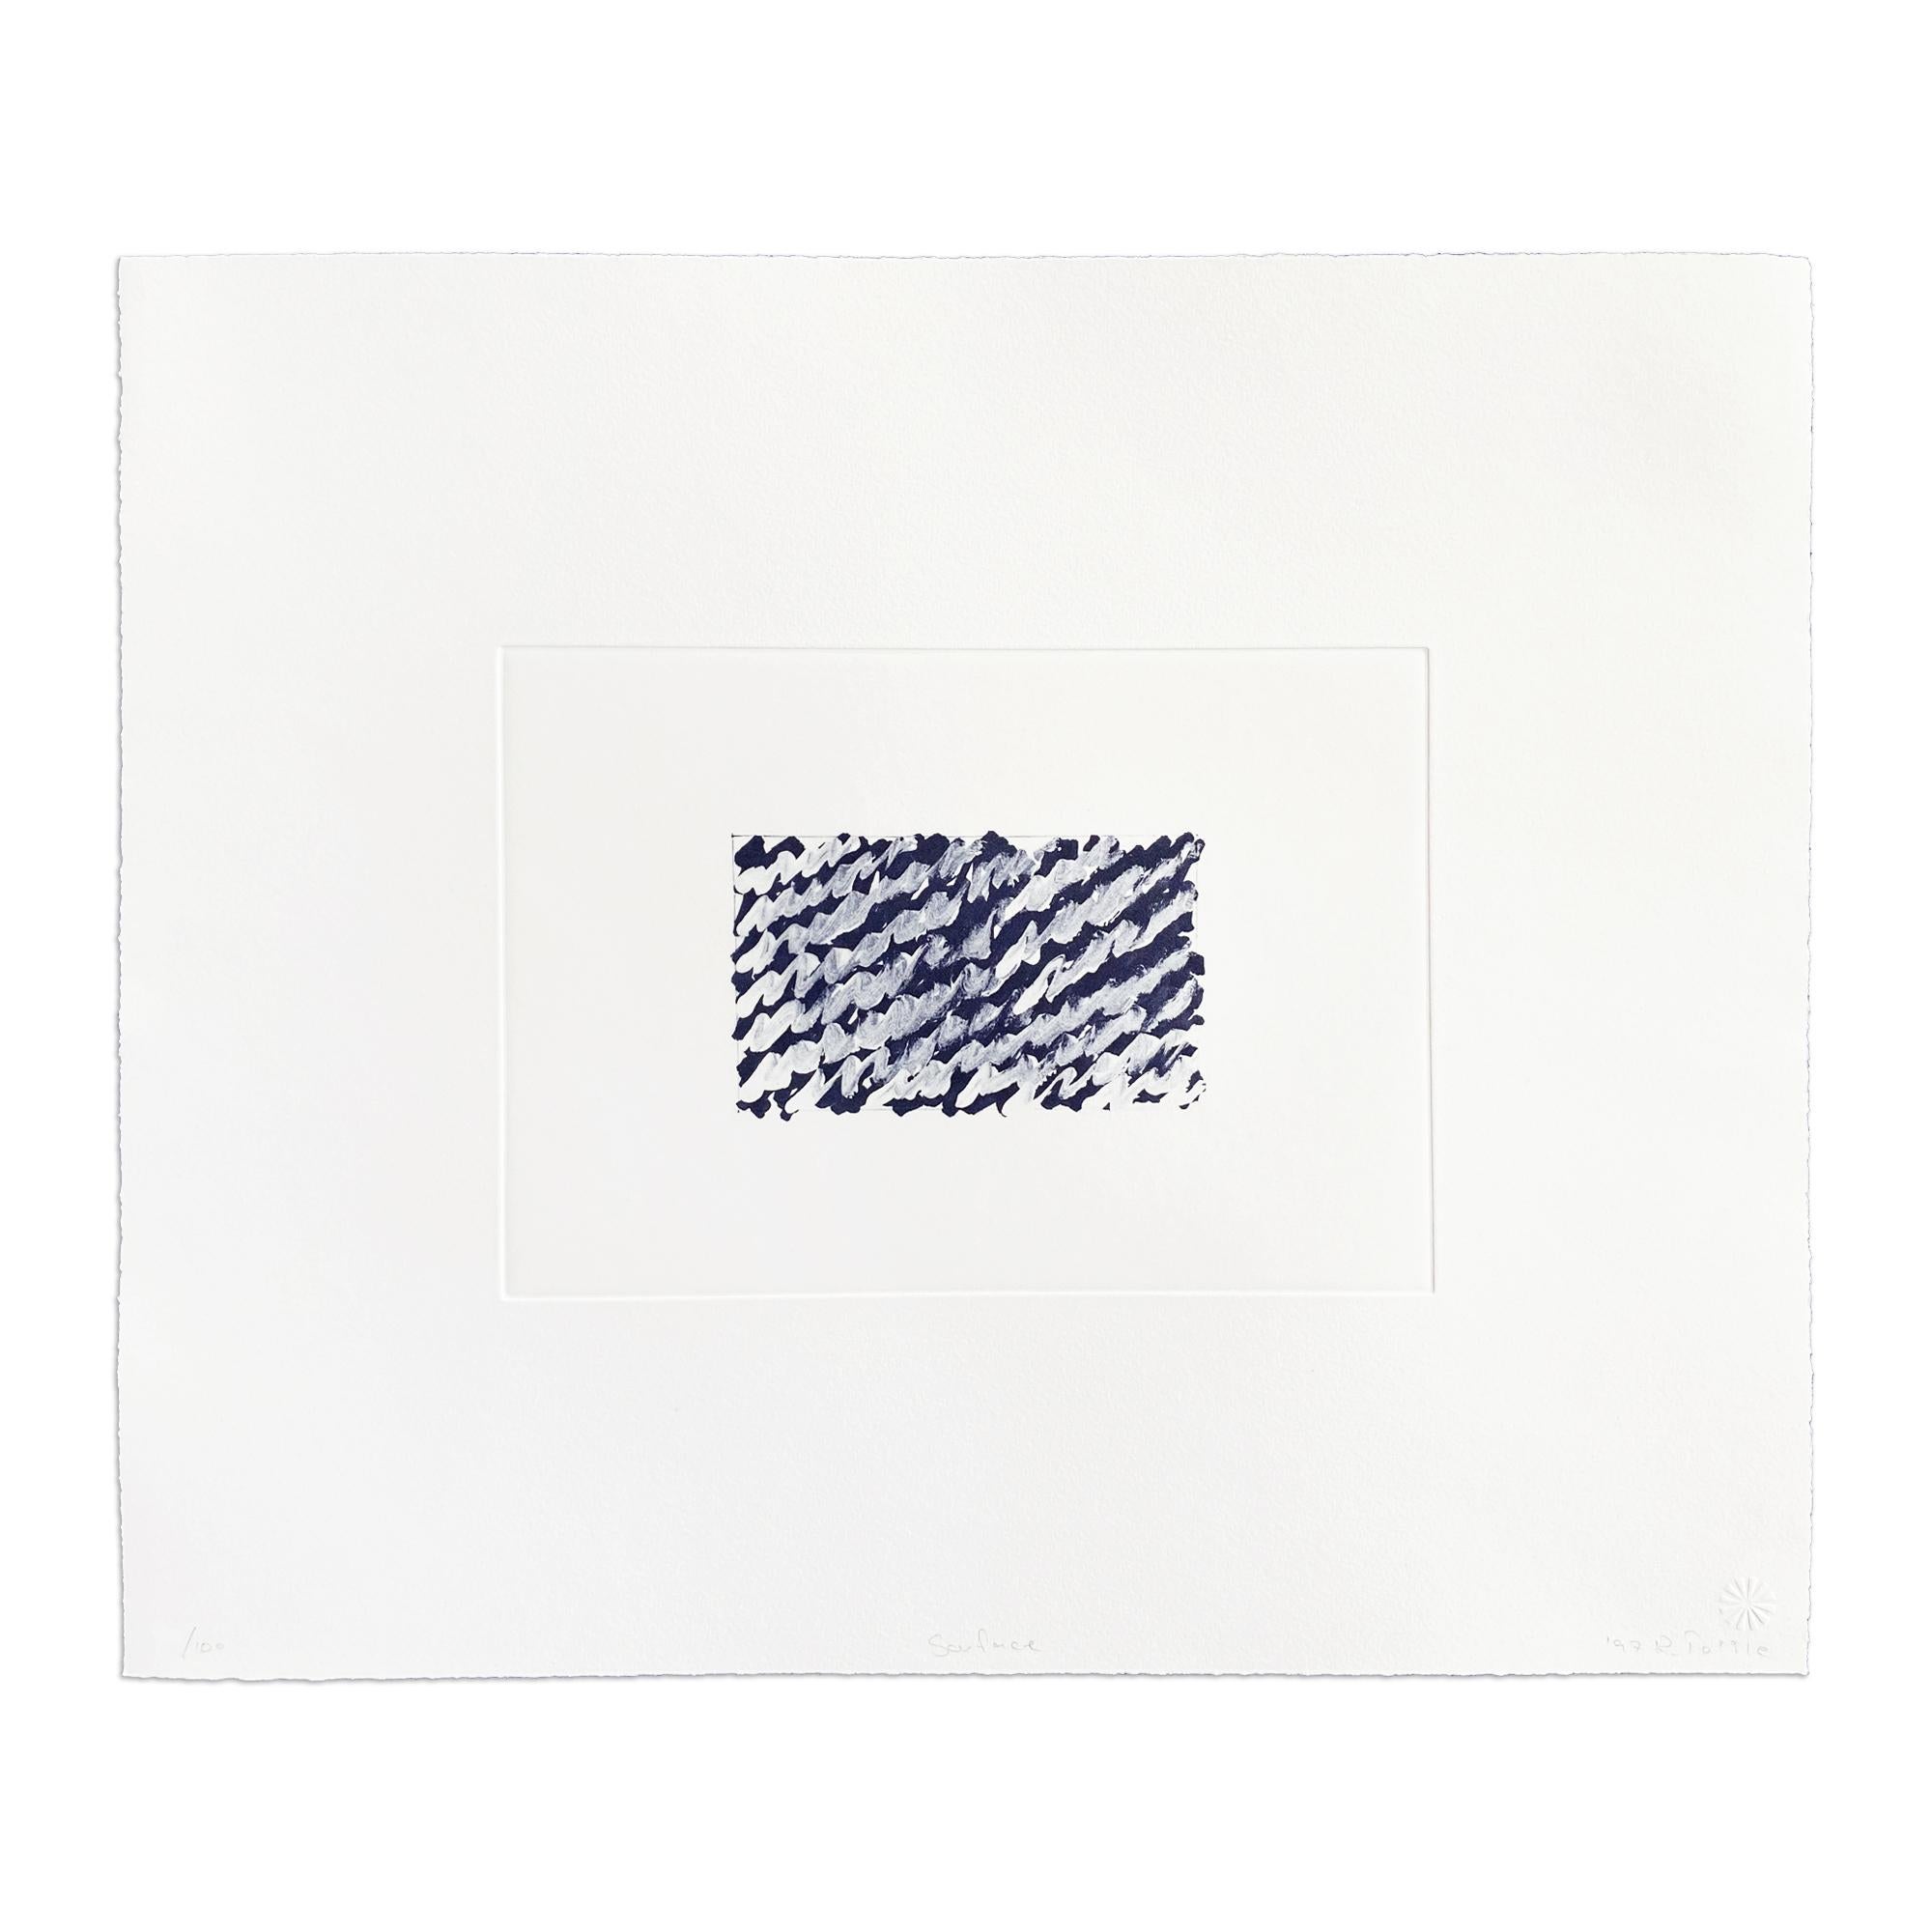 Richard Tuttle, Surface: Contemporary Art, Minimalism, Signed Print